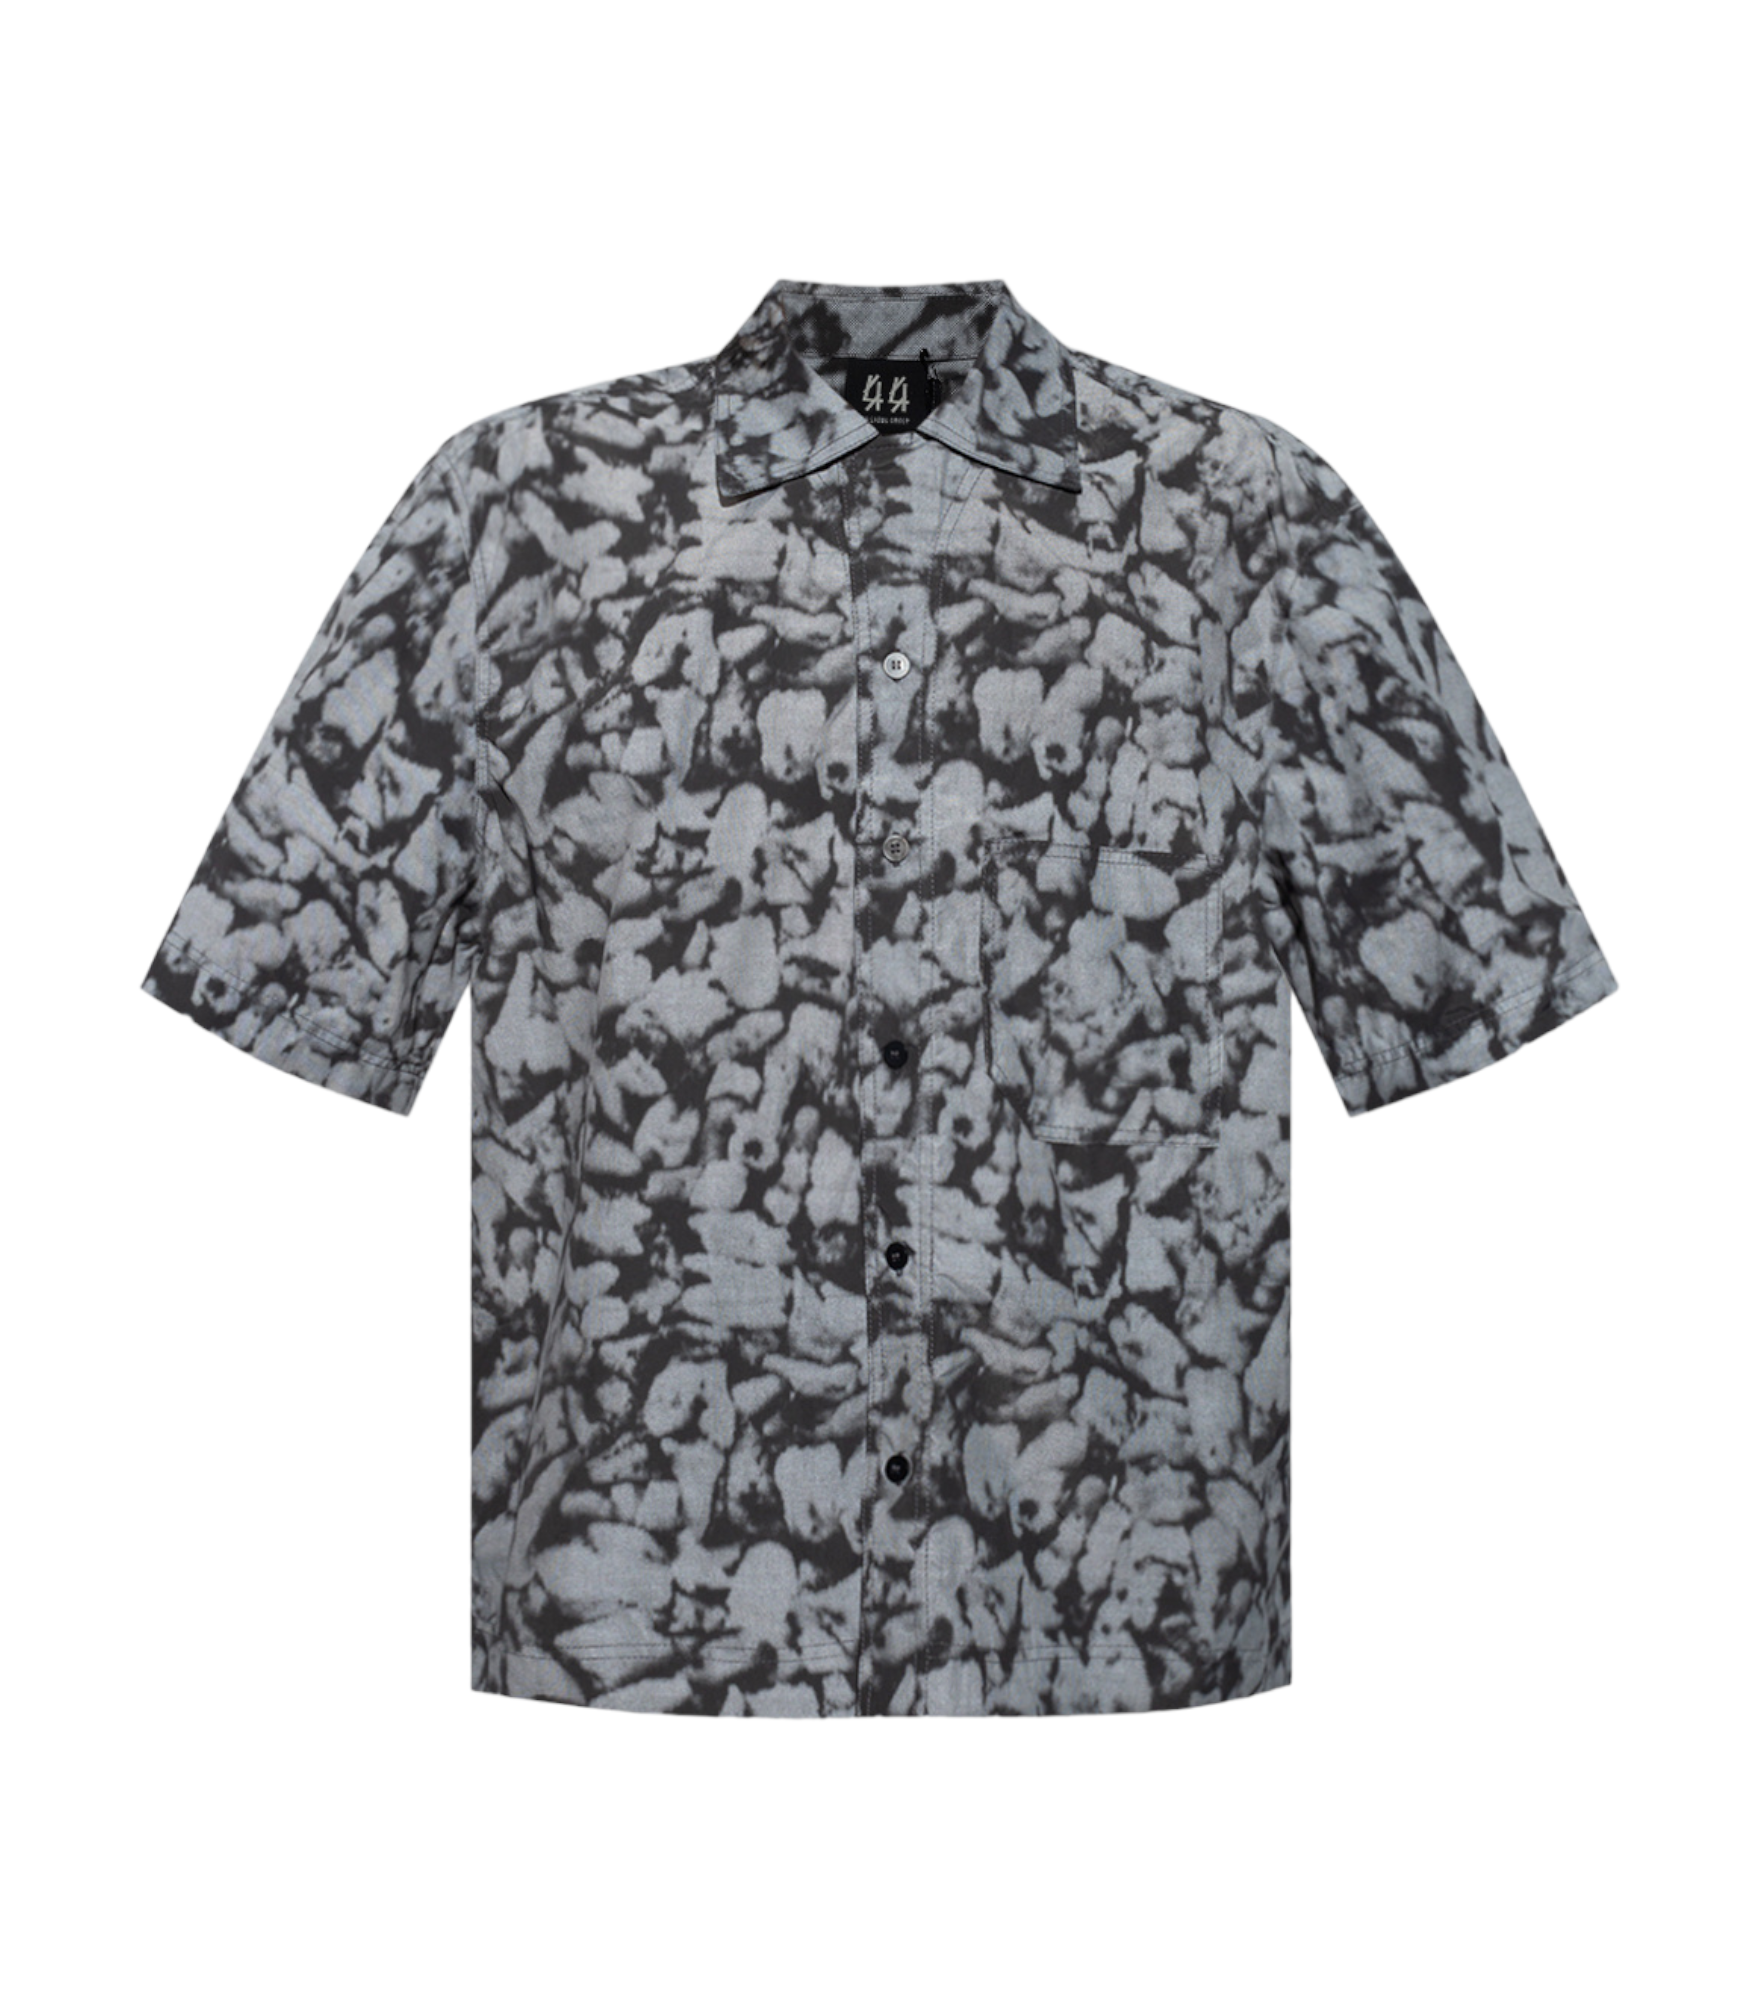 44 Label Group Printed Zerfall Short Sleeve Shirt